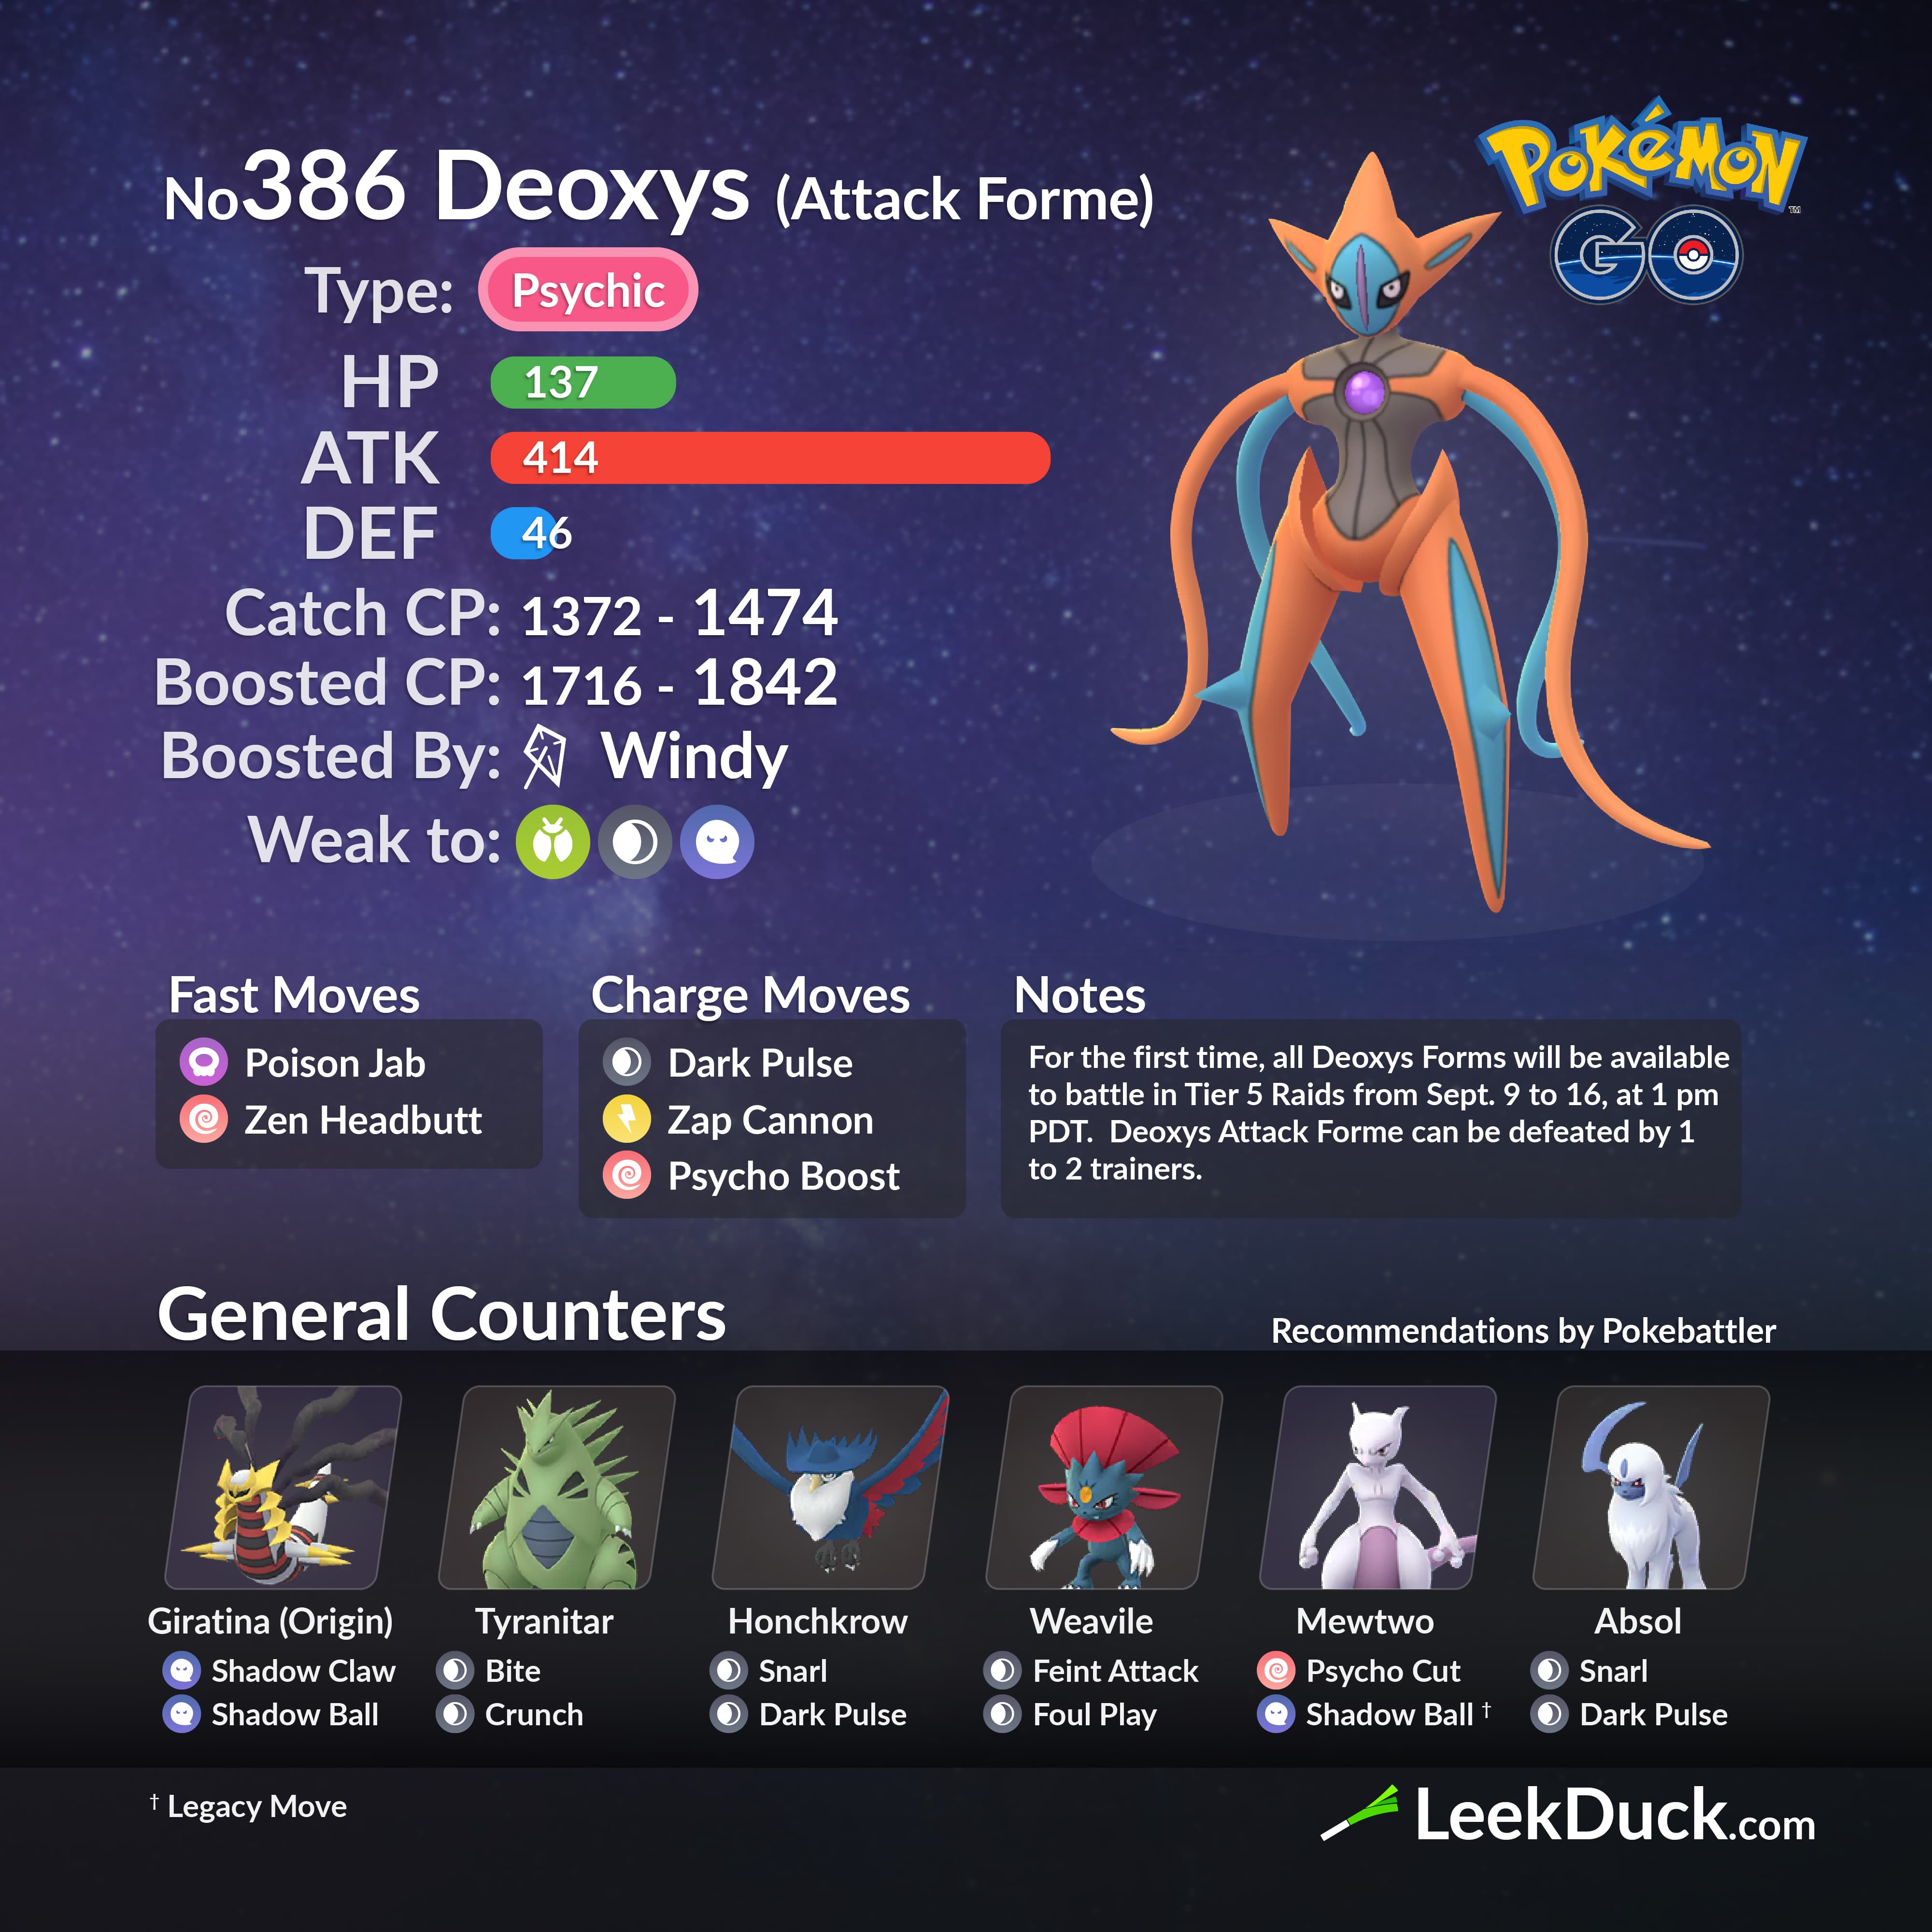 Pokemon GO Deoxys Forms, Raid, and Shiny Guide - Pokemon GO Guide - IGN